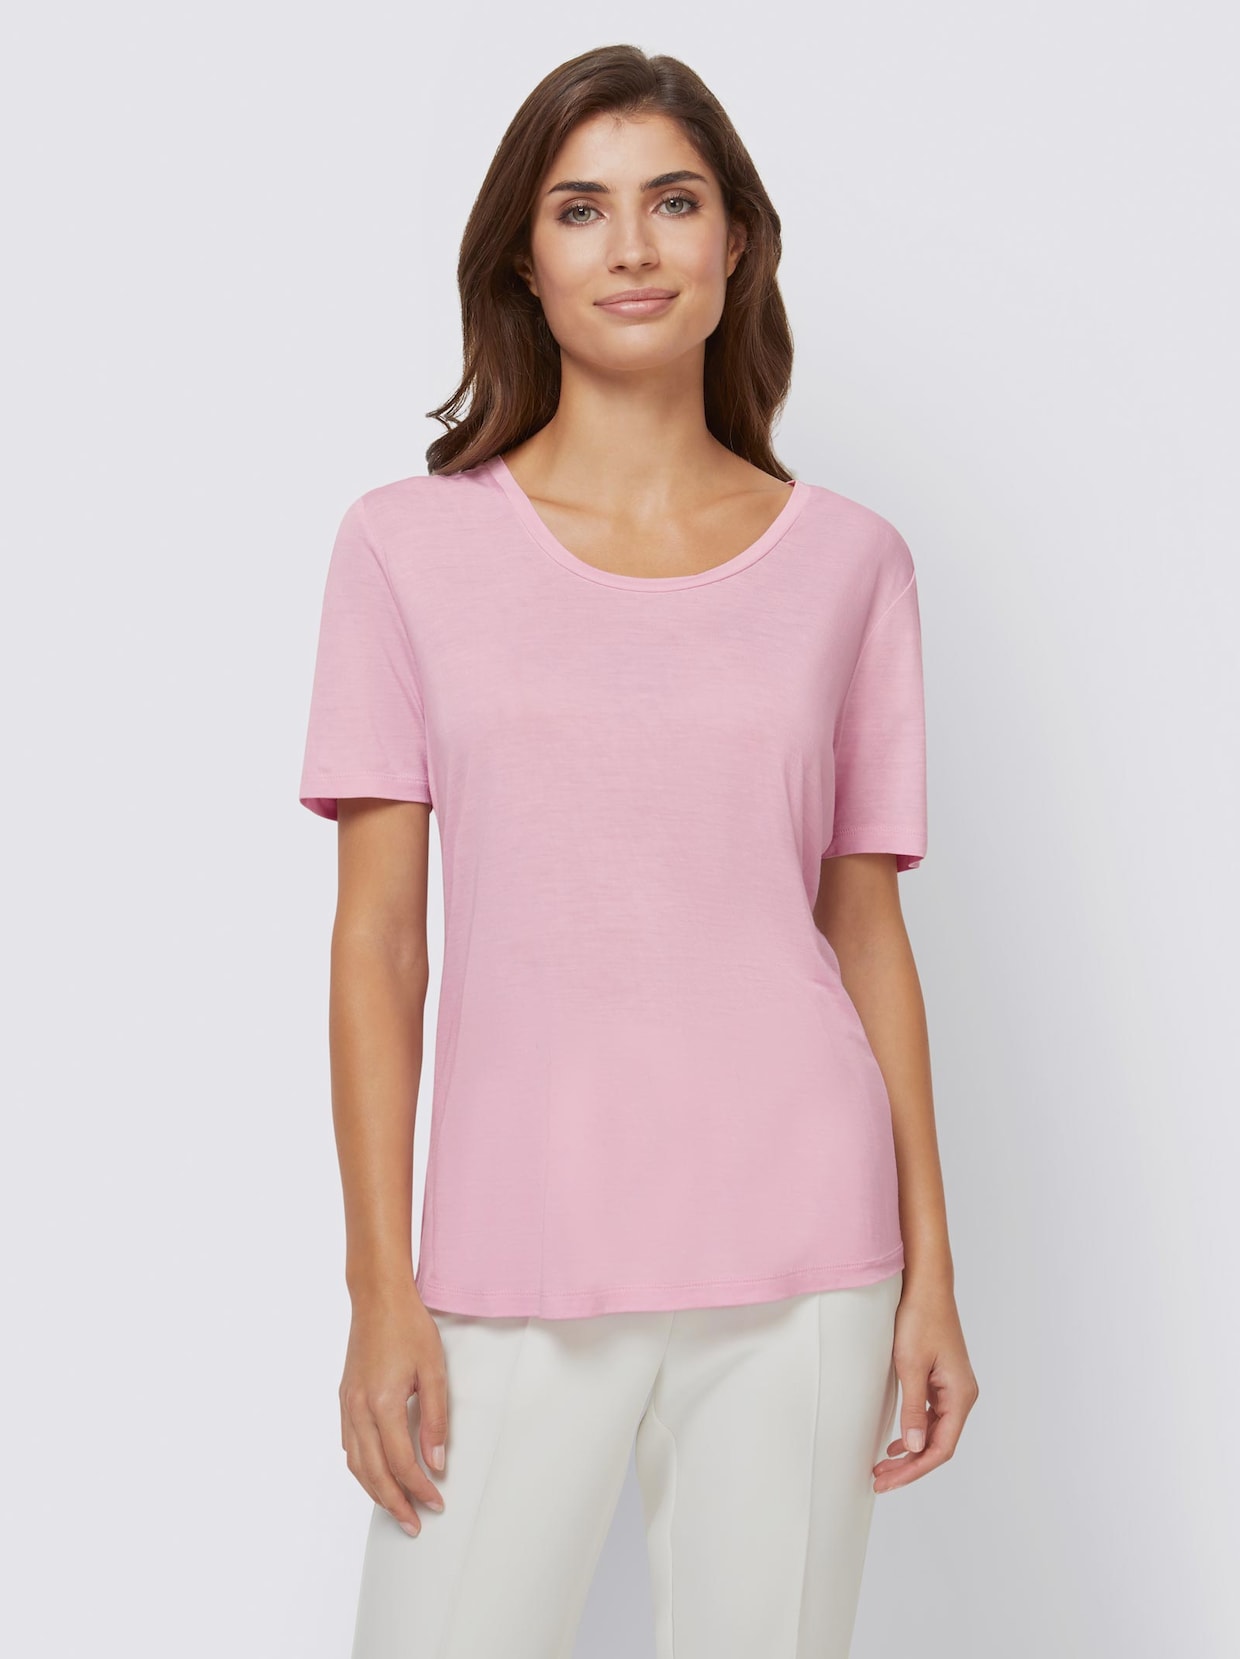 Ashley Brooke Shirt - rosé